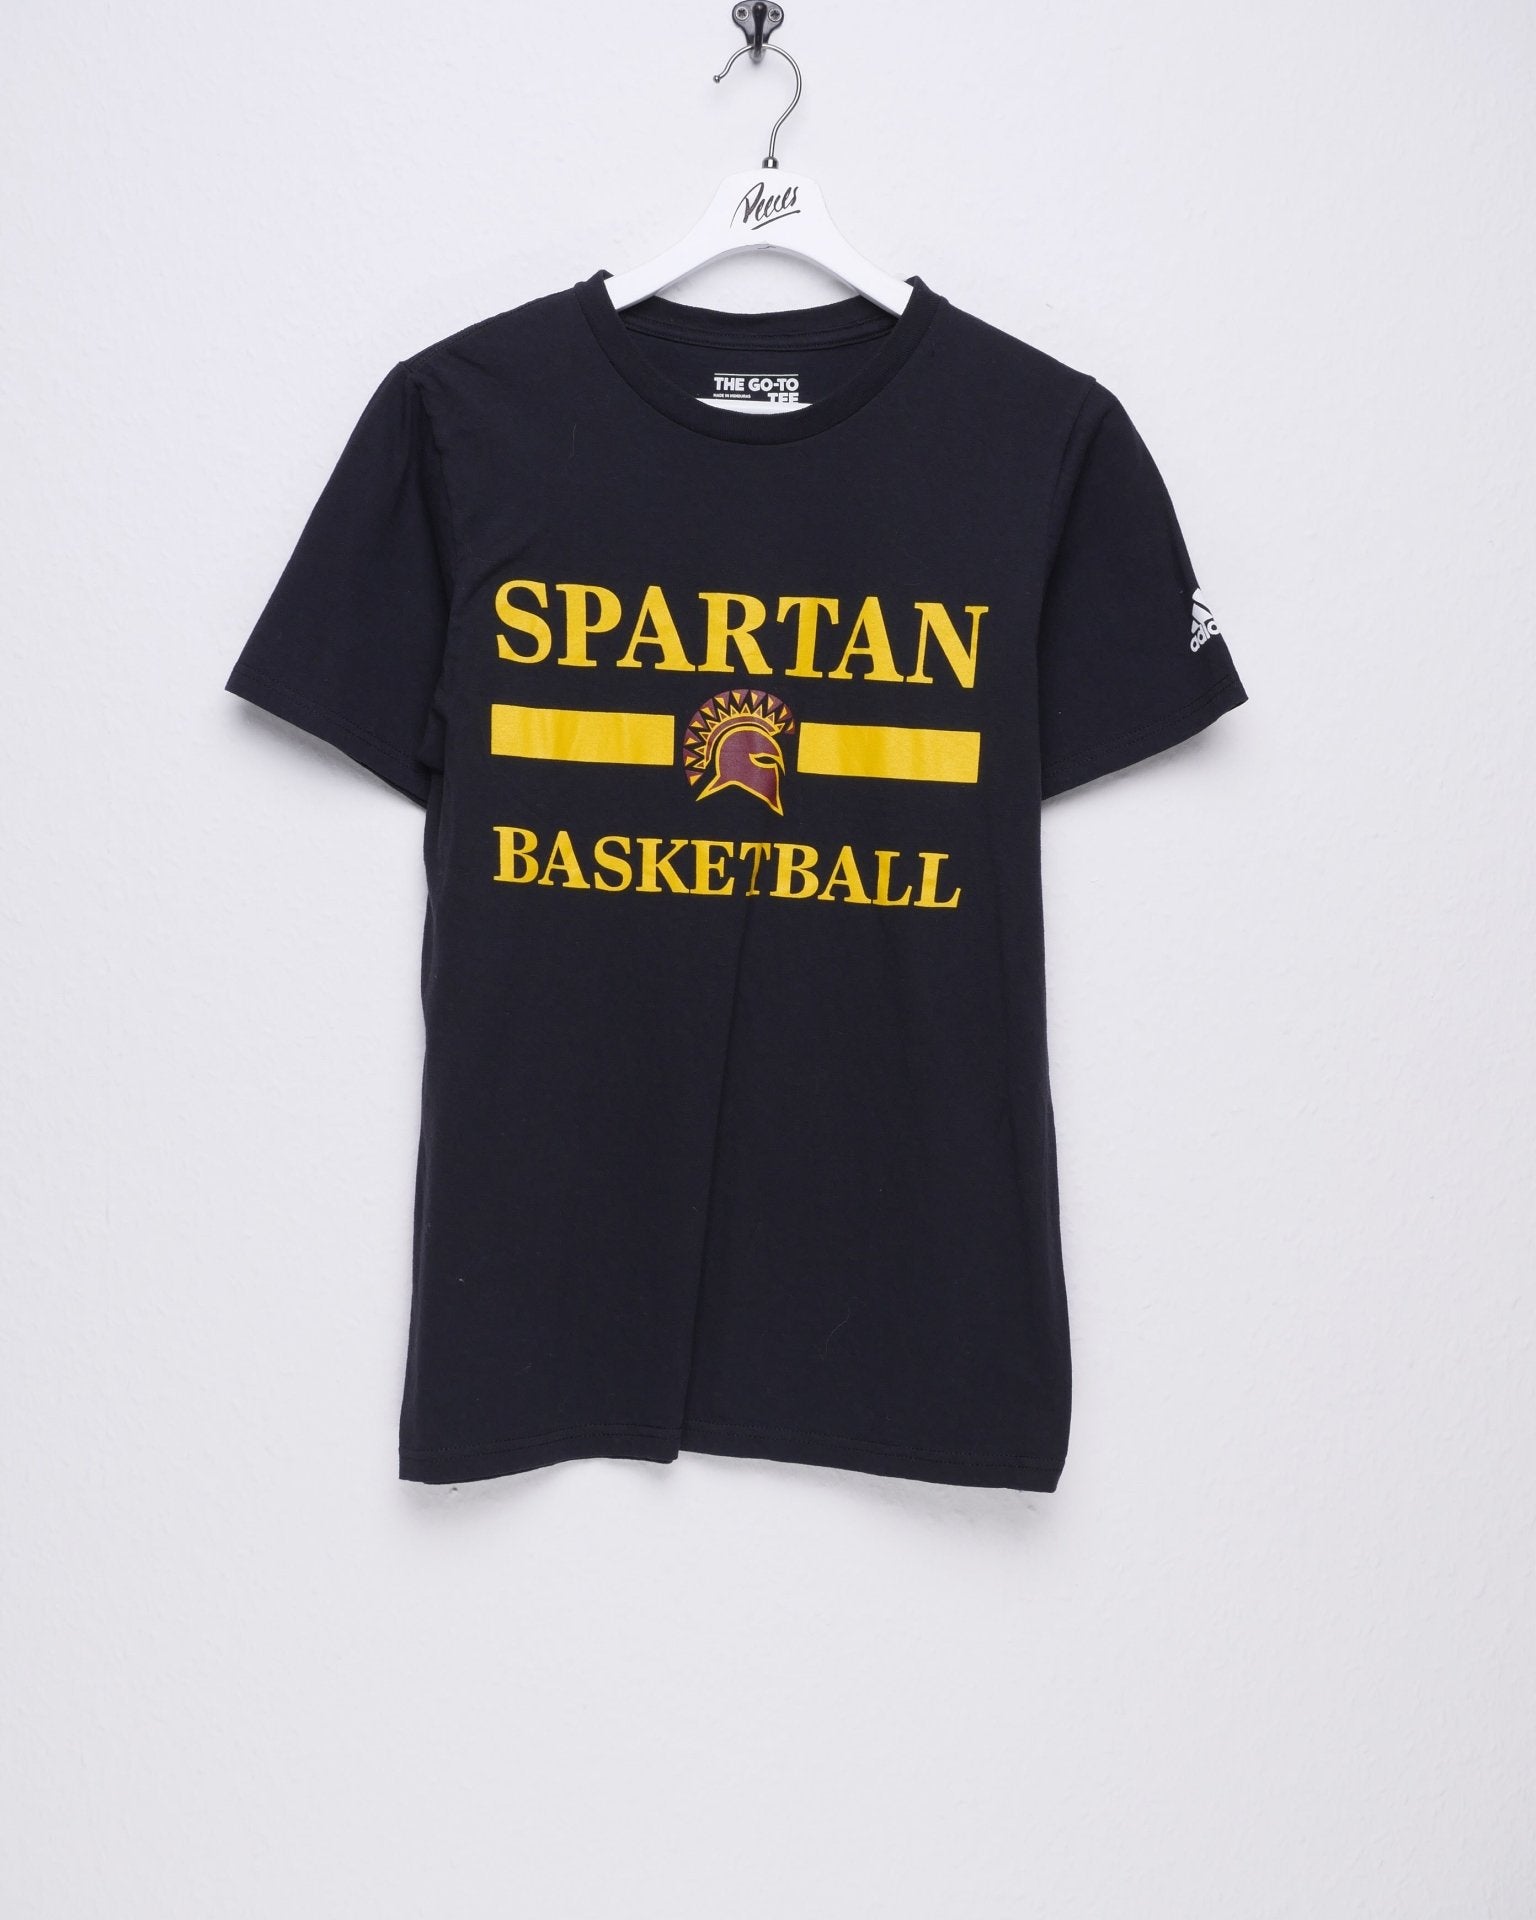 Adidas printed Logo 'Spartan Basketball' black Shirt - Peeces